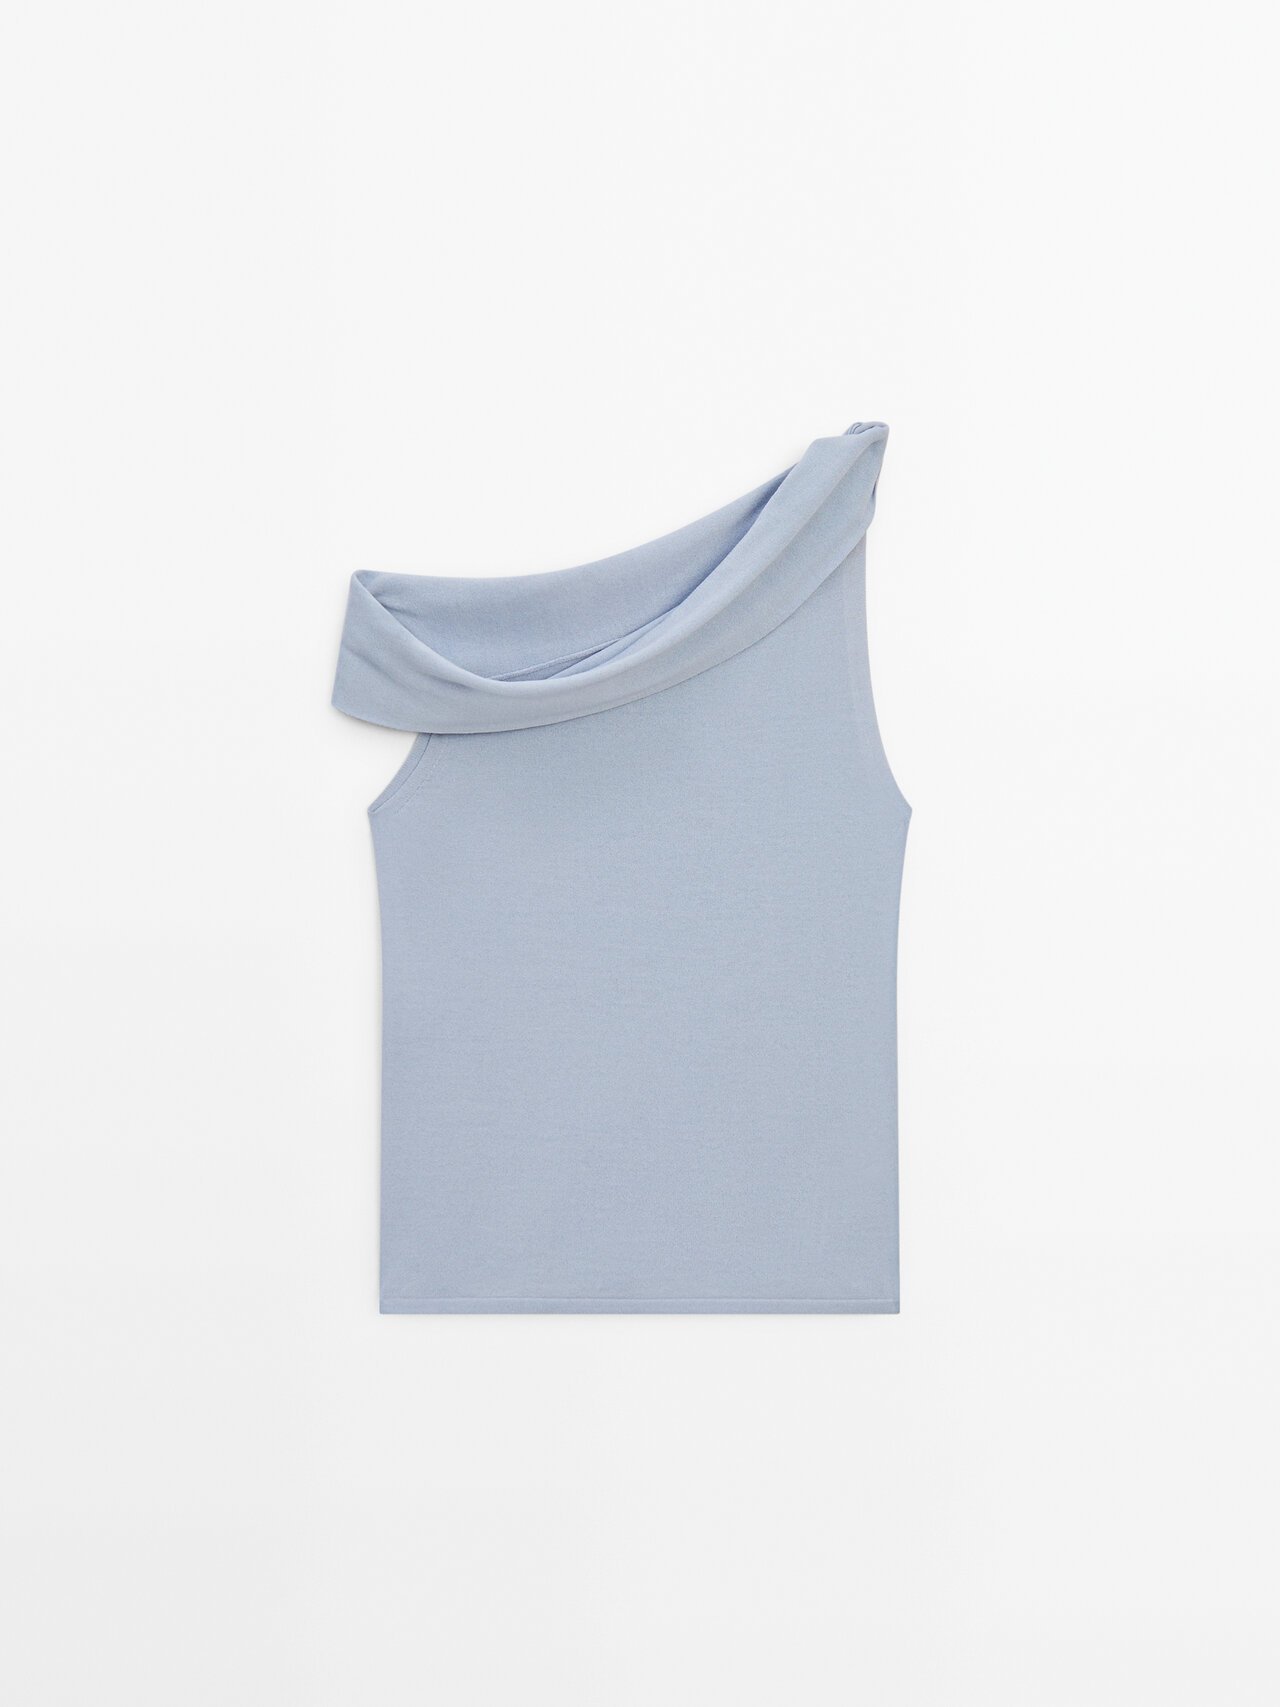 Massimo Dutti Top With Asymmetric Draped Neckline In Light Blue